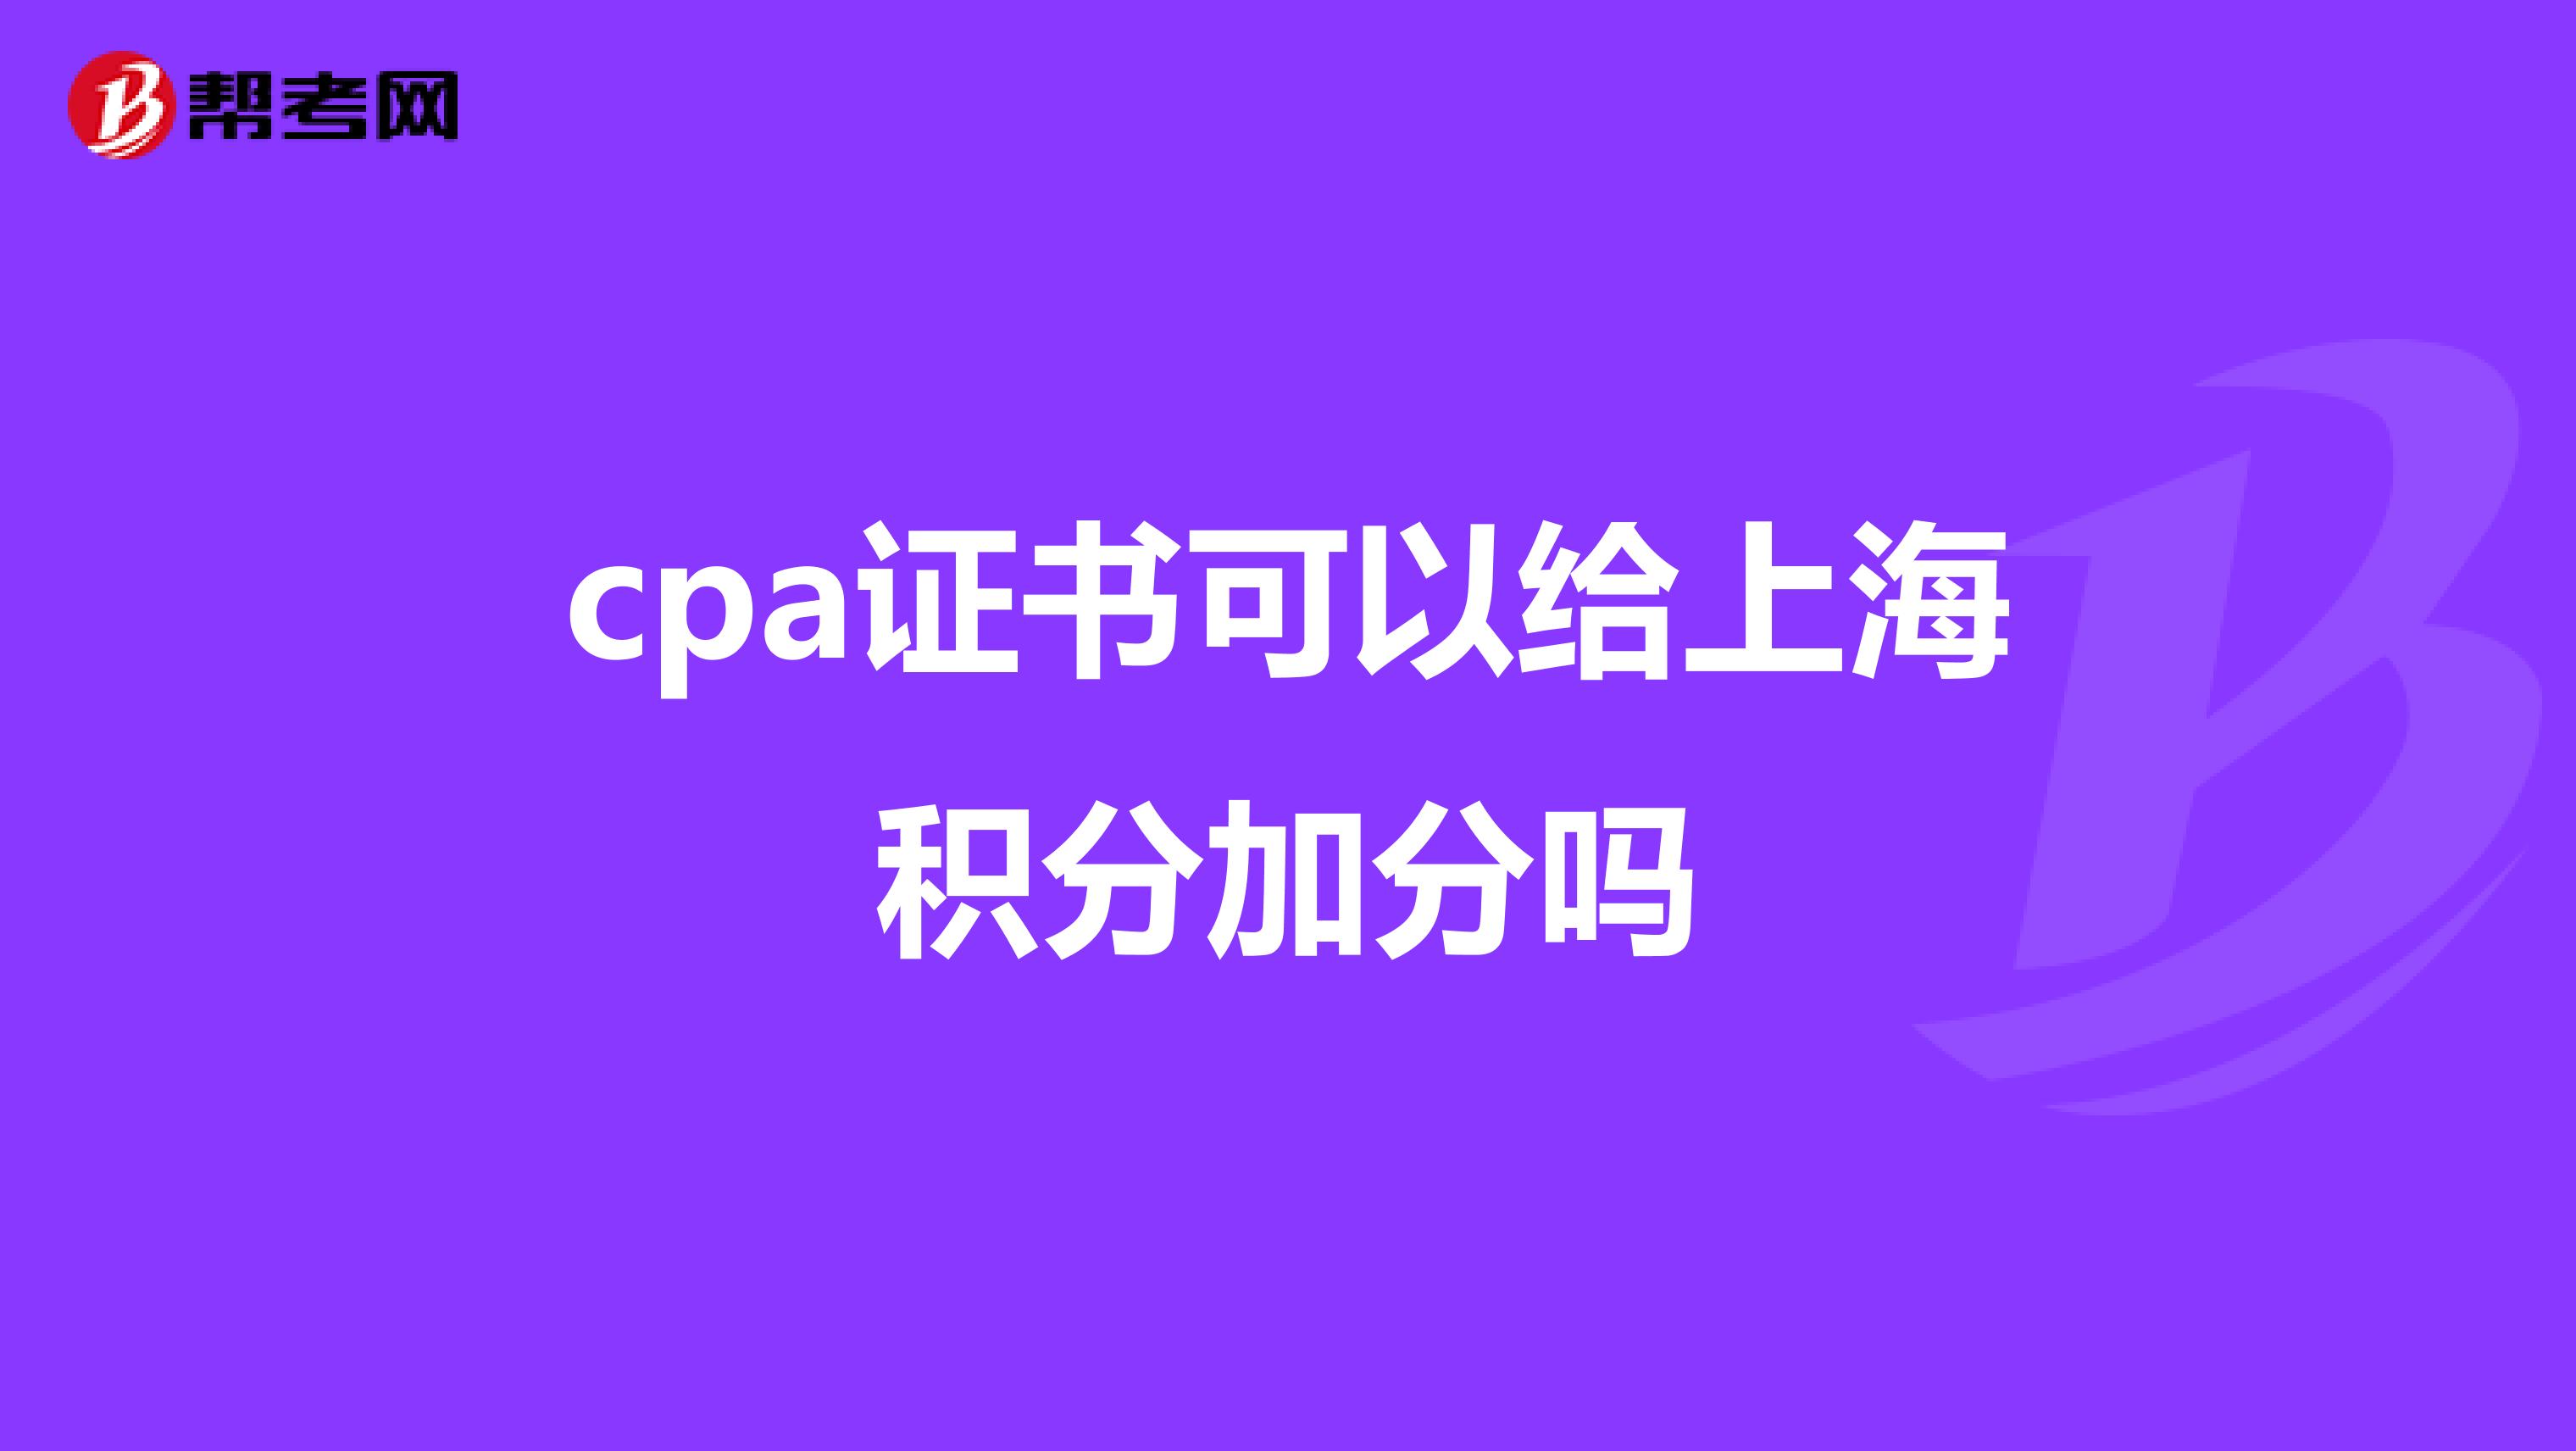 cpa证书可以给上海积分加分吗